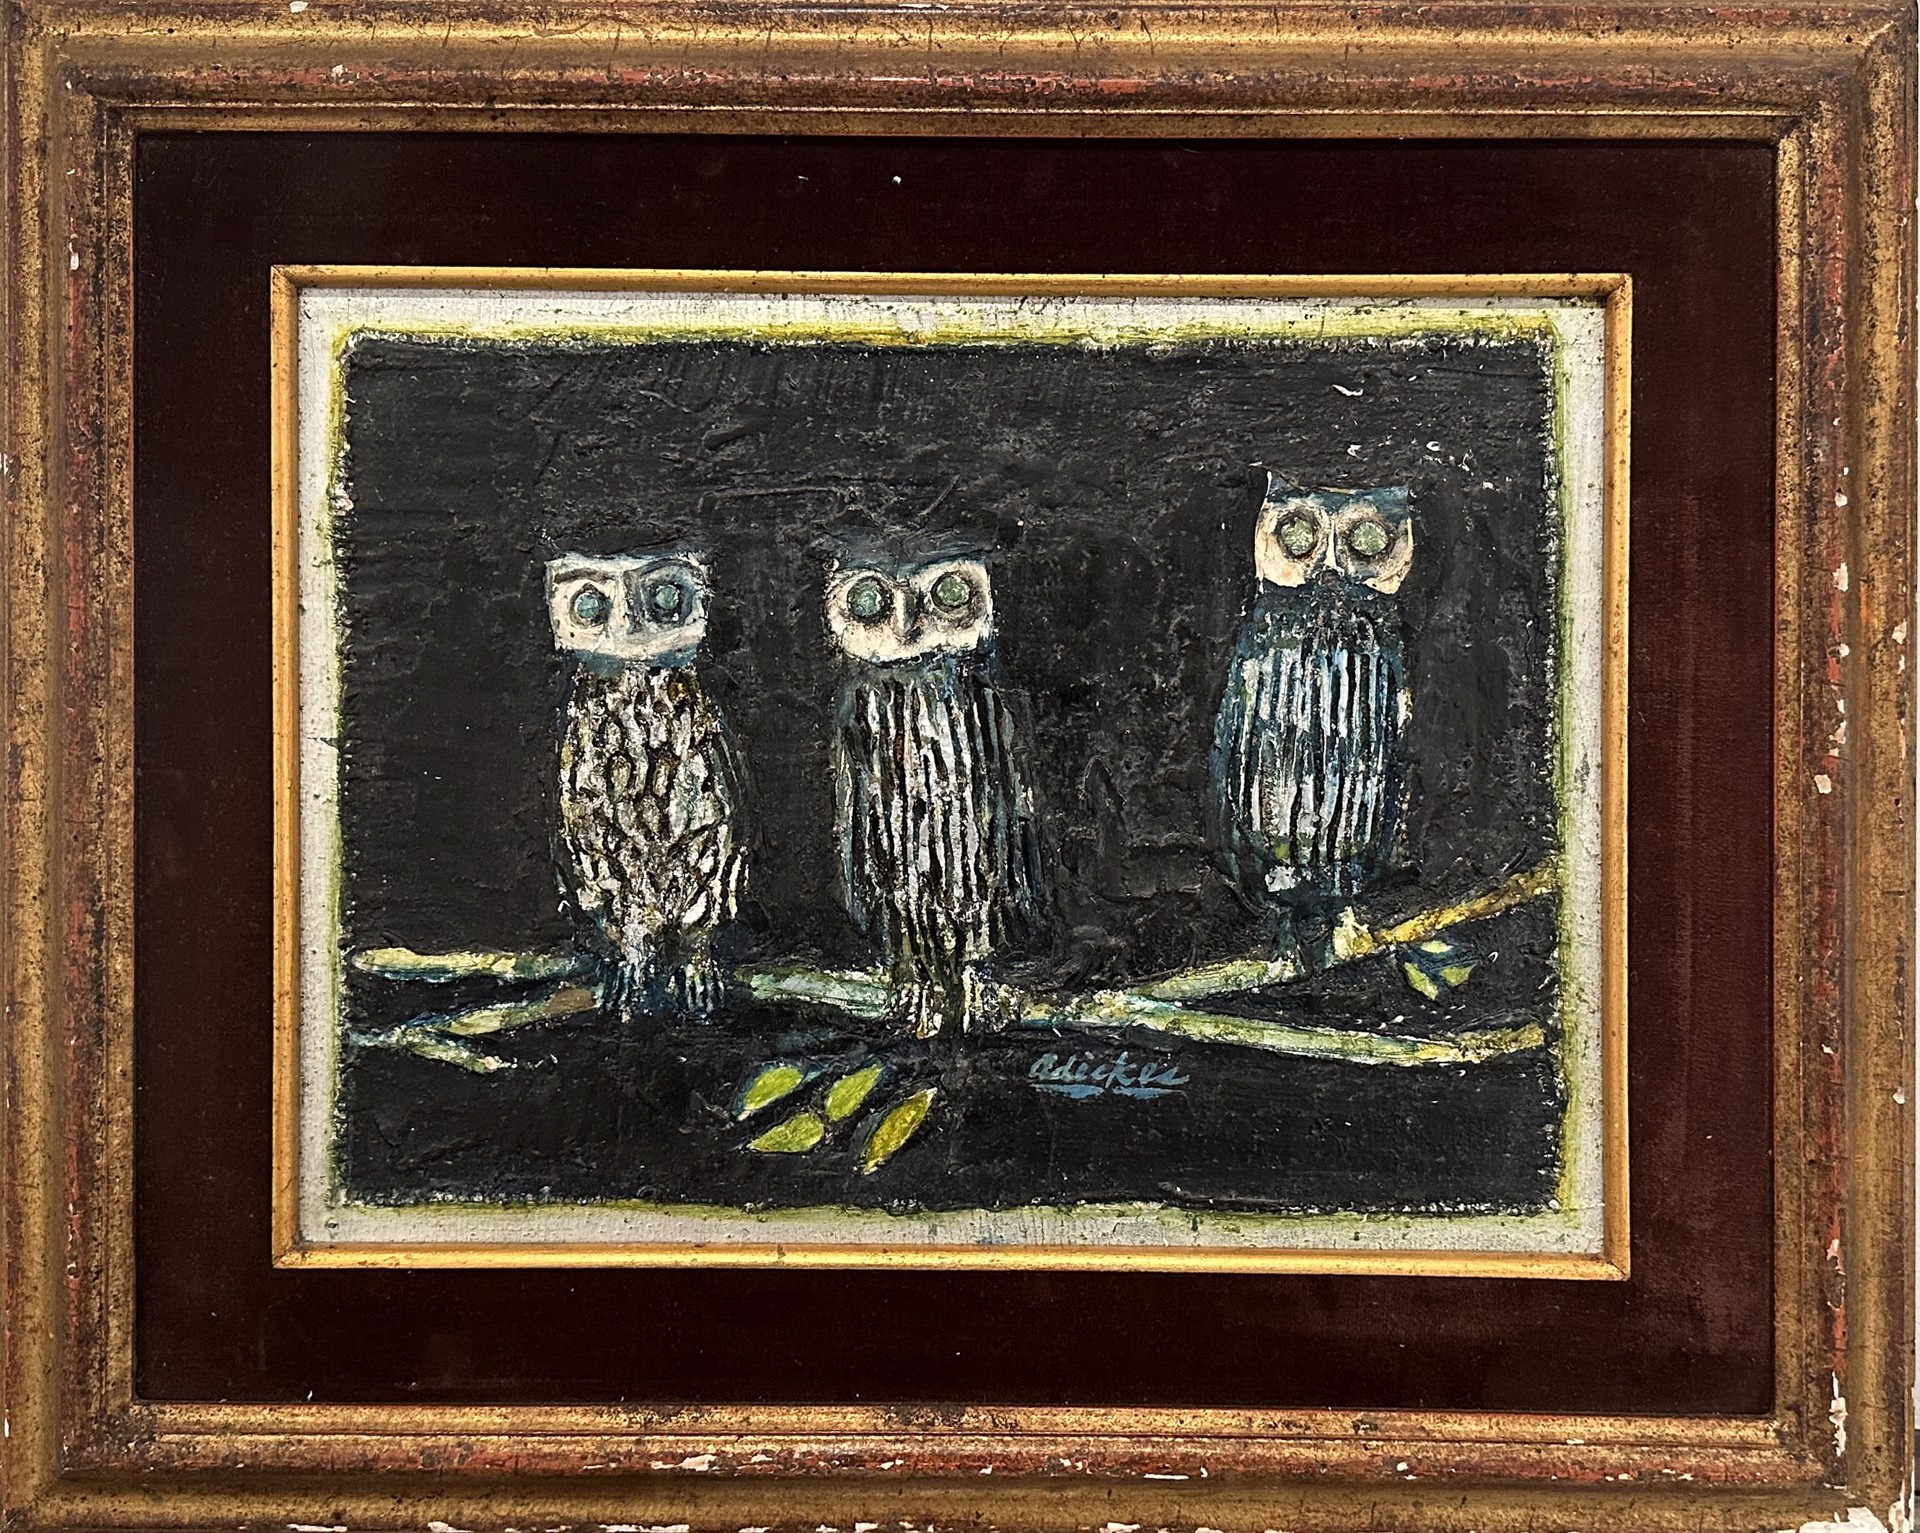 Three Owls by David Adickes